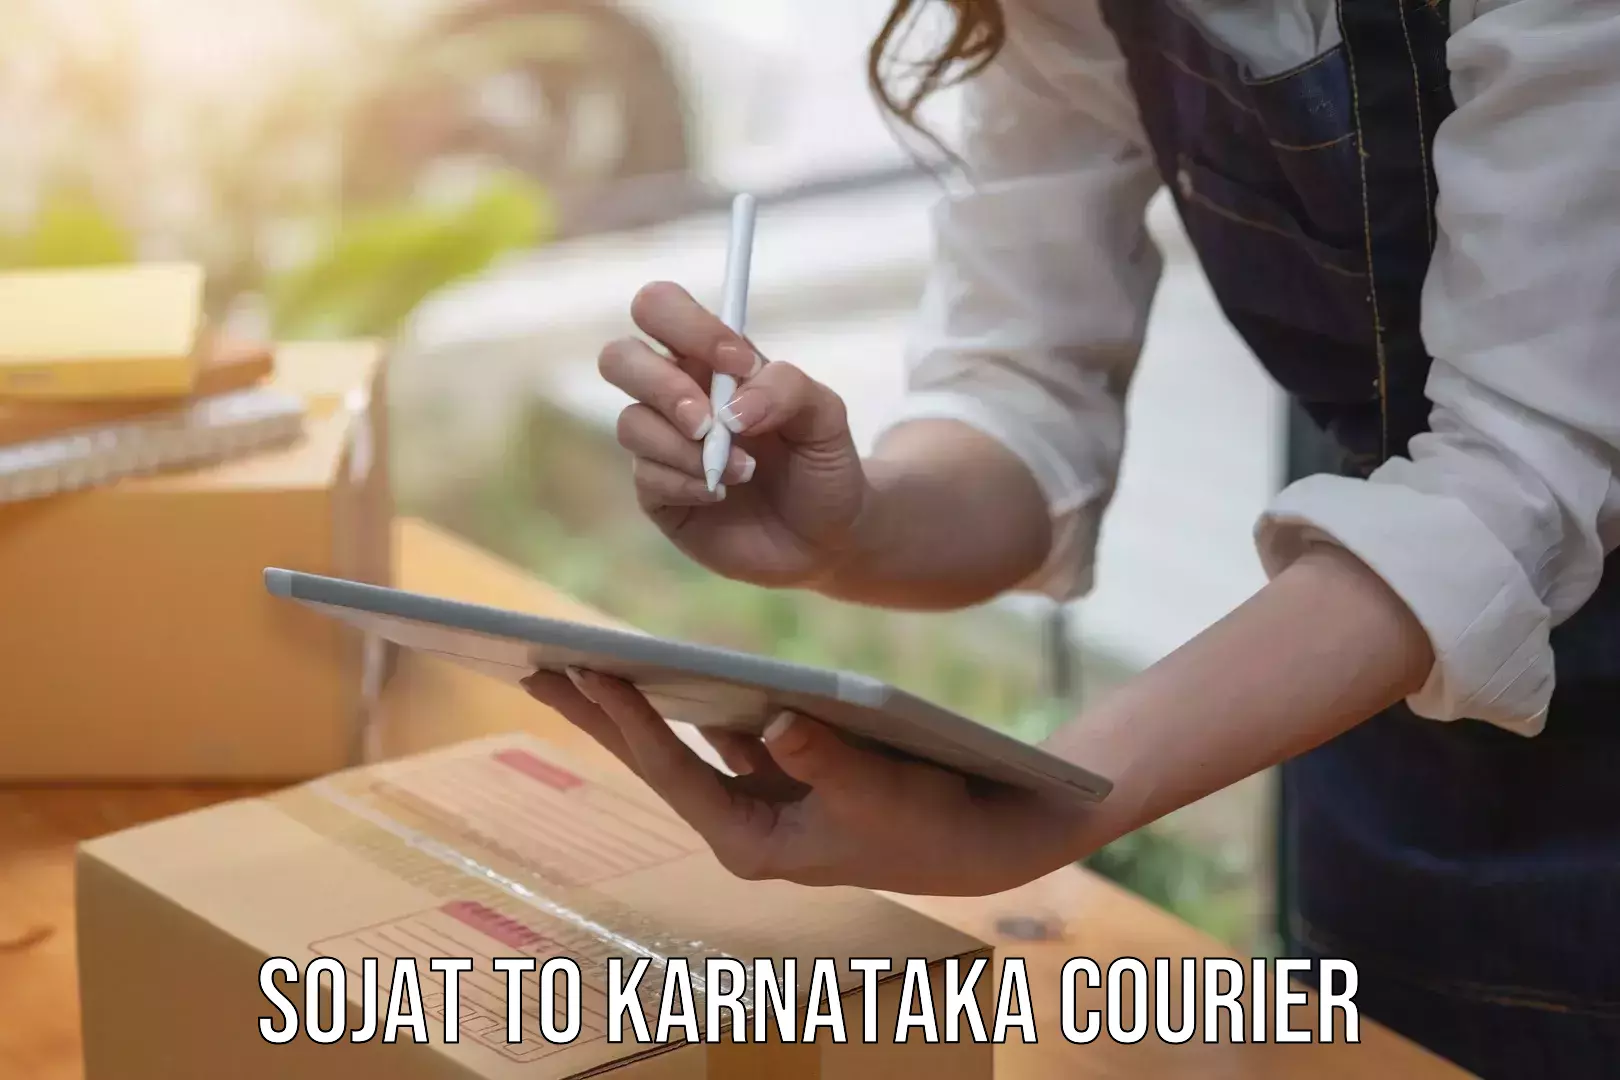 Urban courier service Sojat to Karnataka